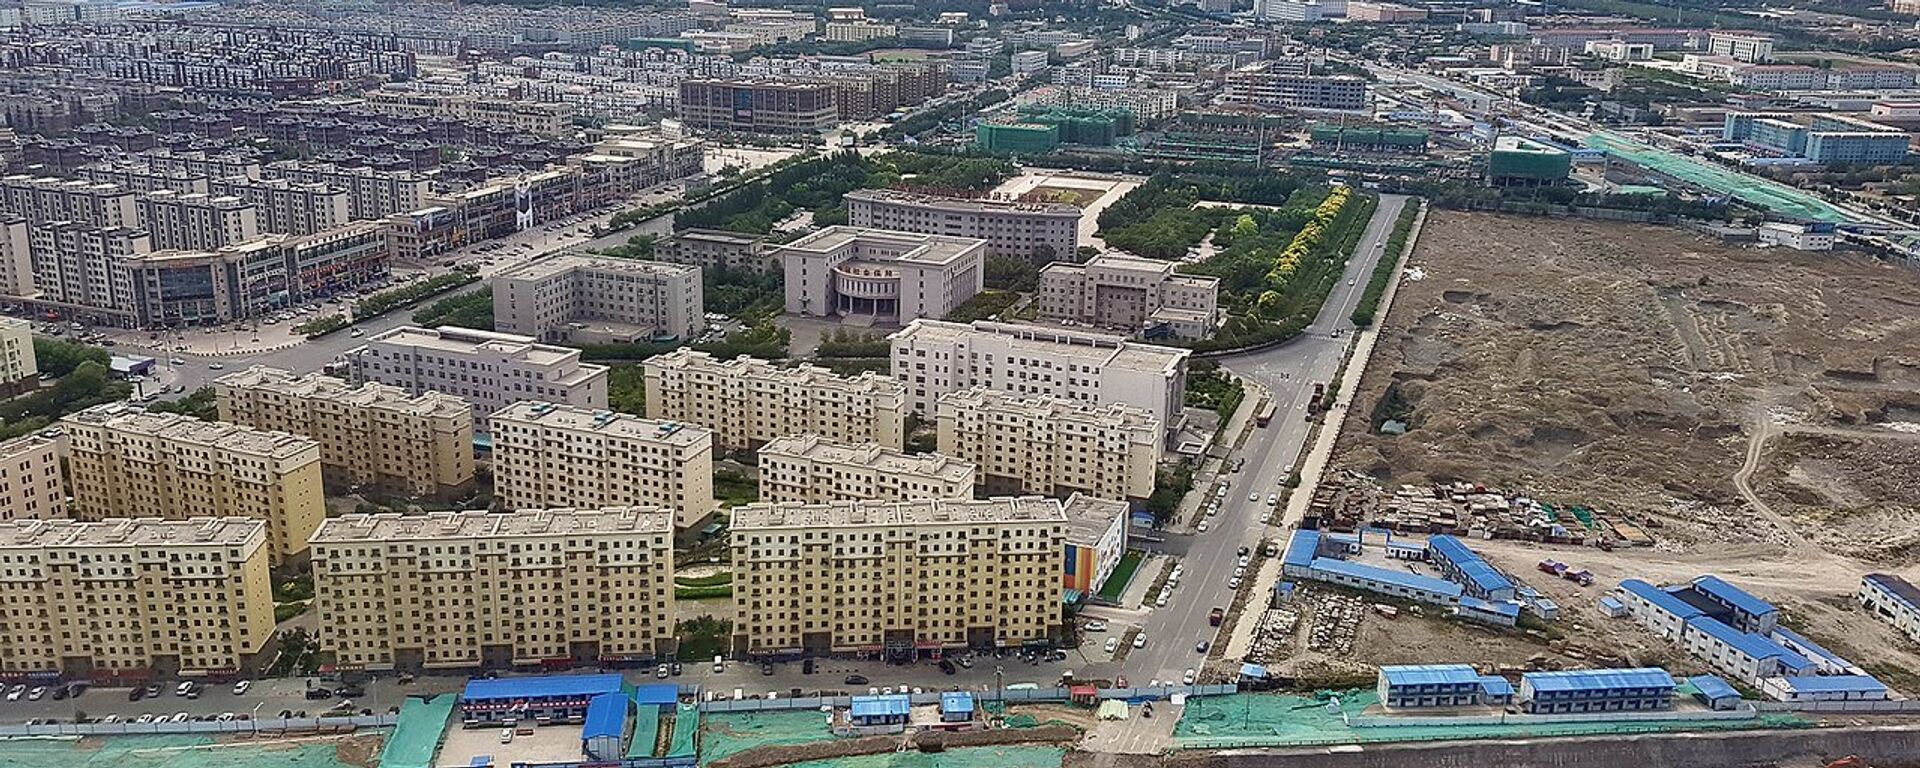 Aerial view of Urumqi, Xinjiang Province, People's Republic of China. - Sputnik International, 1920, 10.03.2021